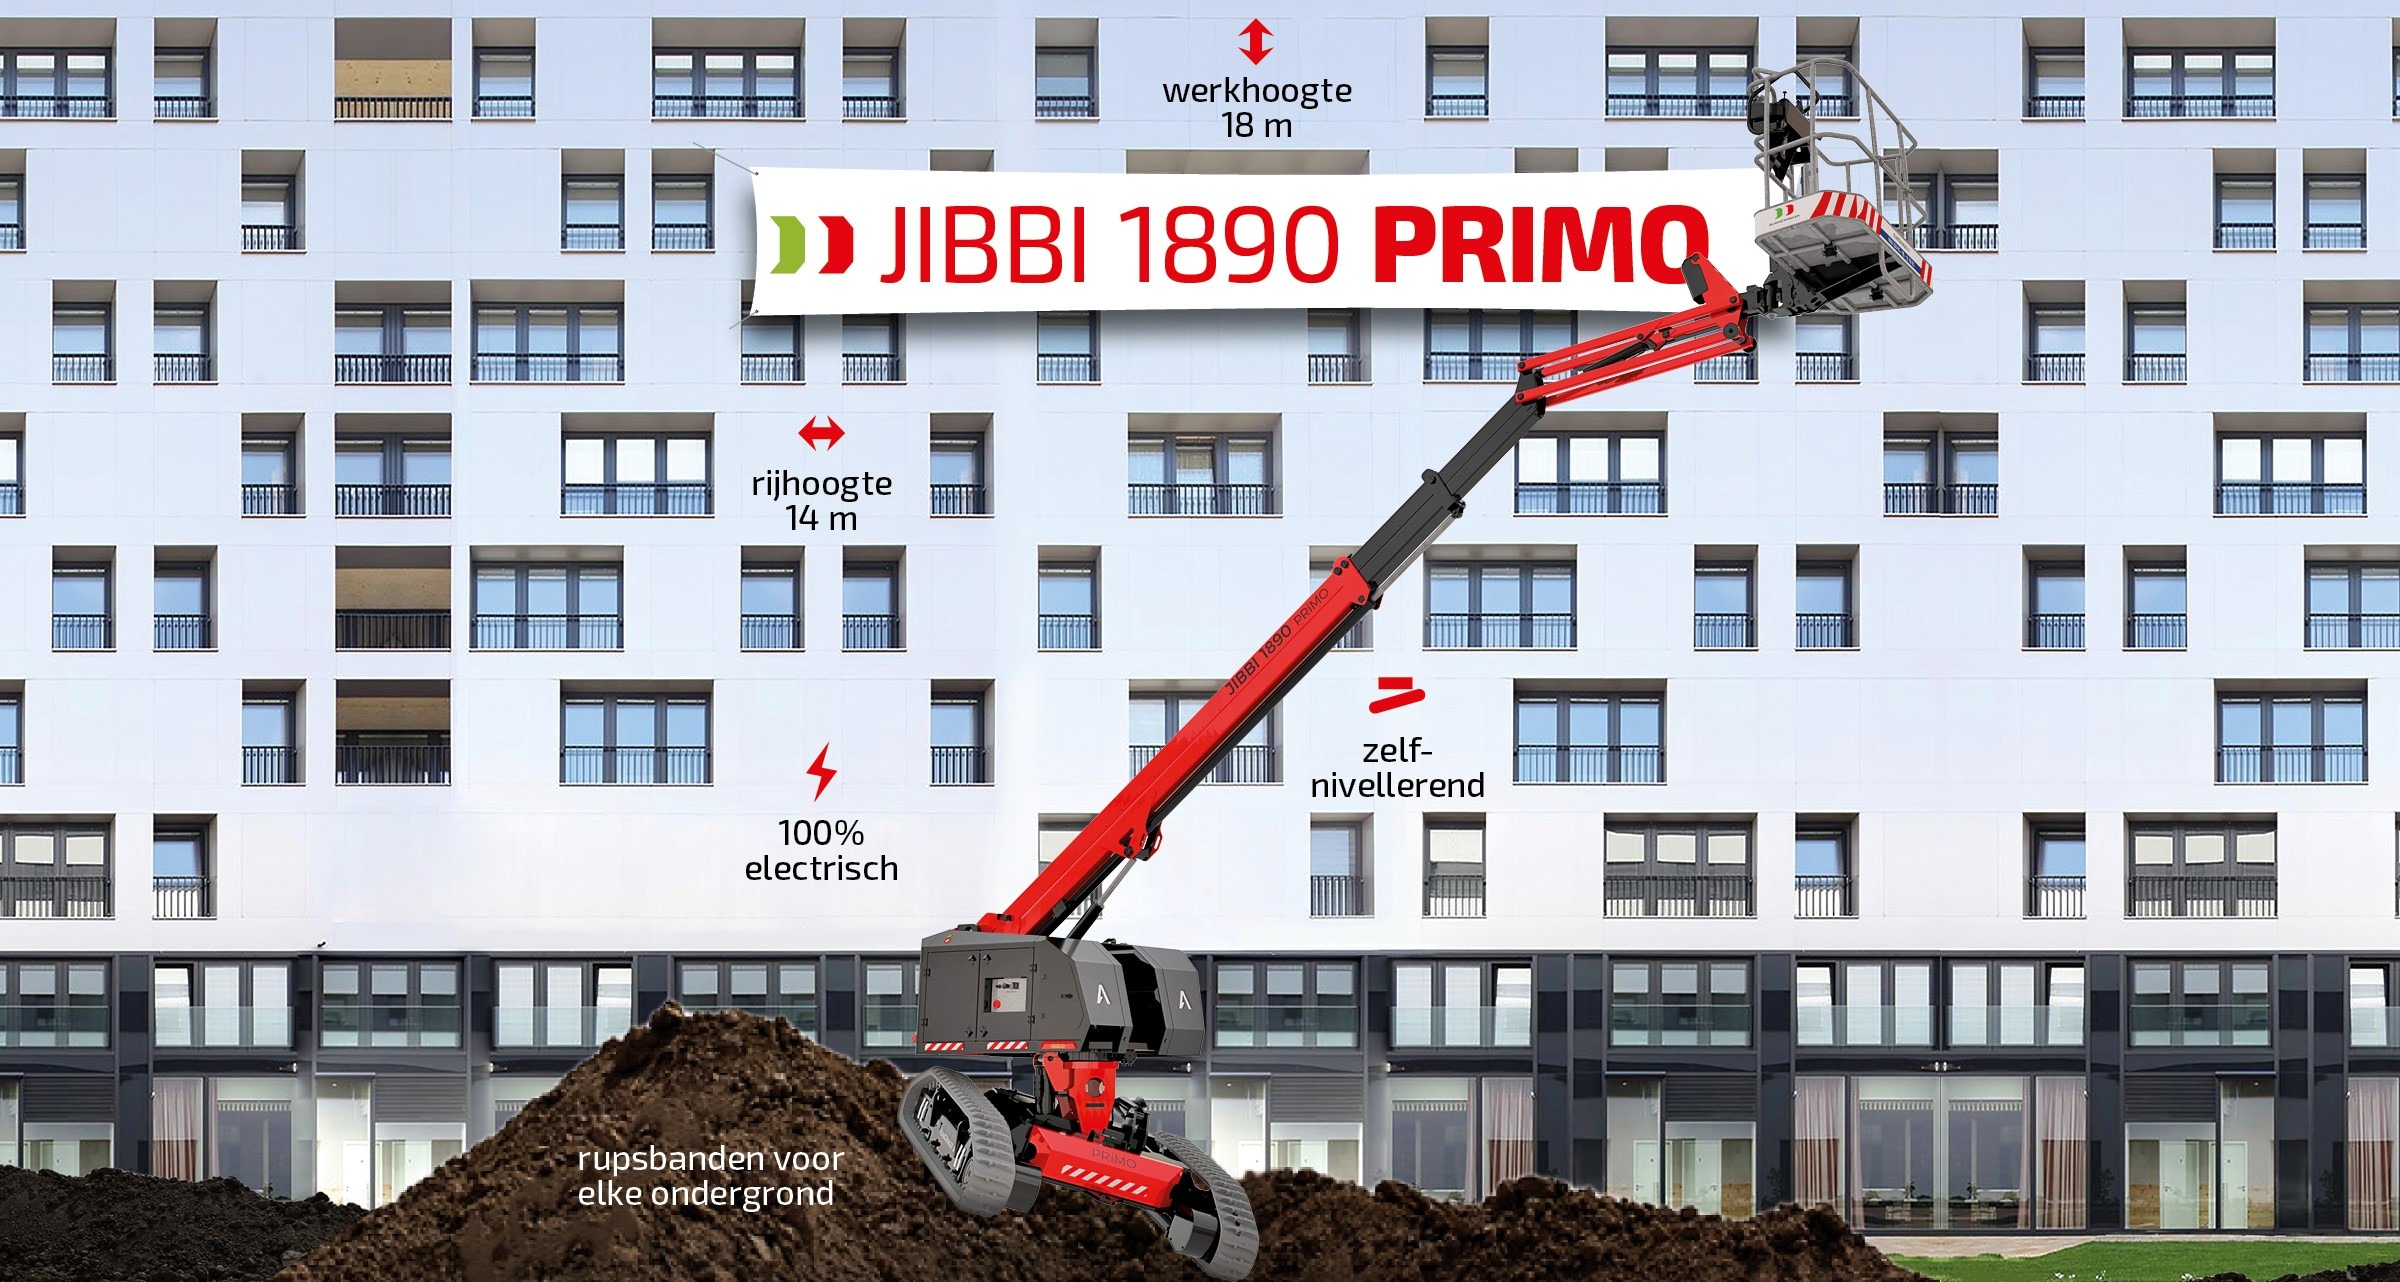 Nieuwe elektrische jibbi primo almacrawler